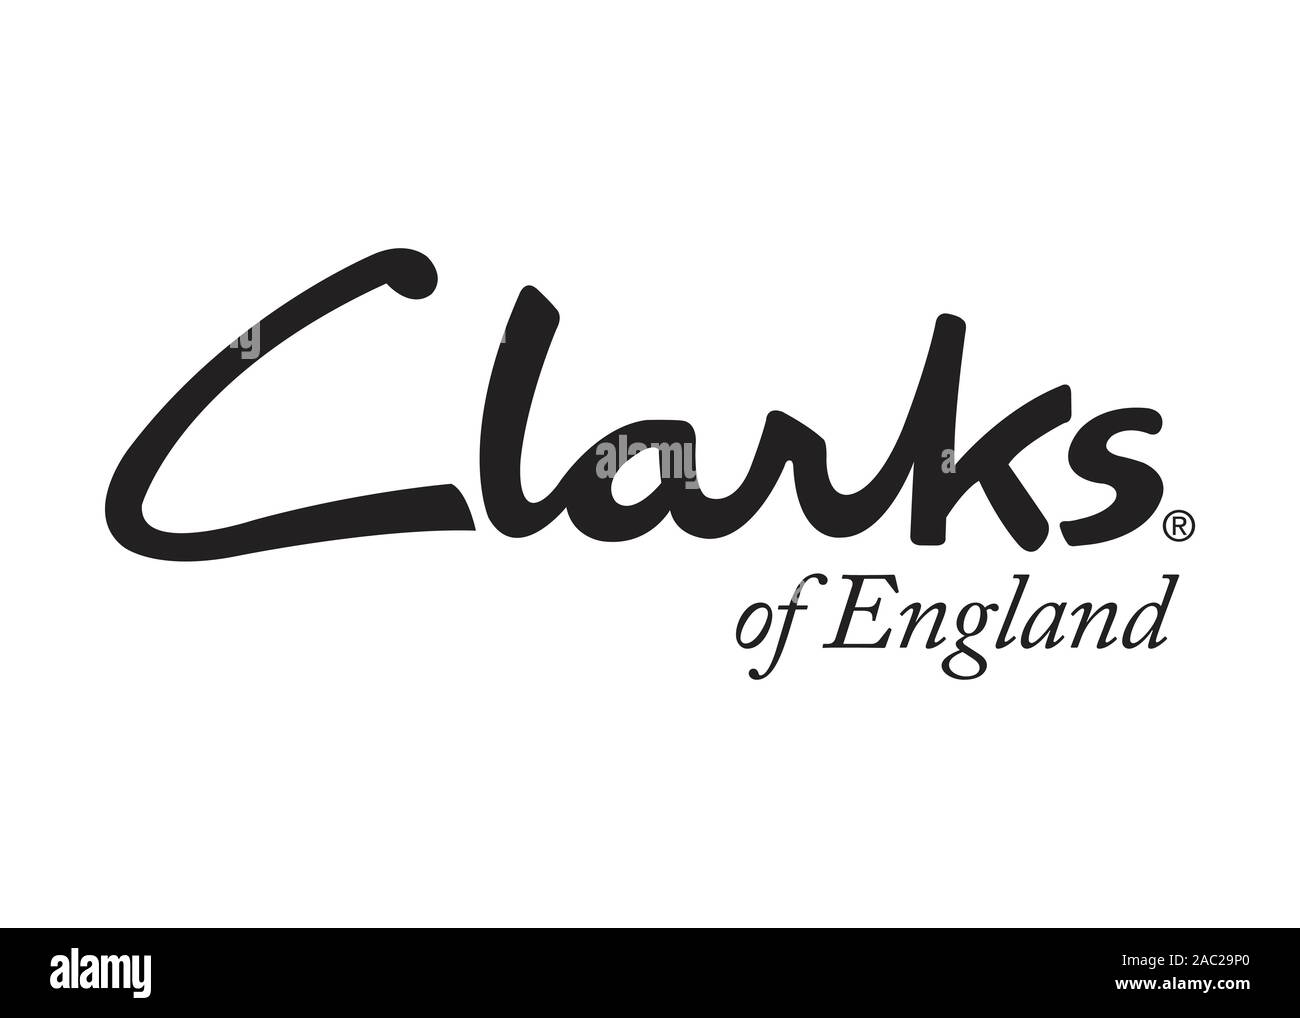 Clarks of England logo Stock Photo - Alamy